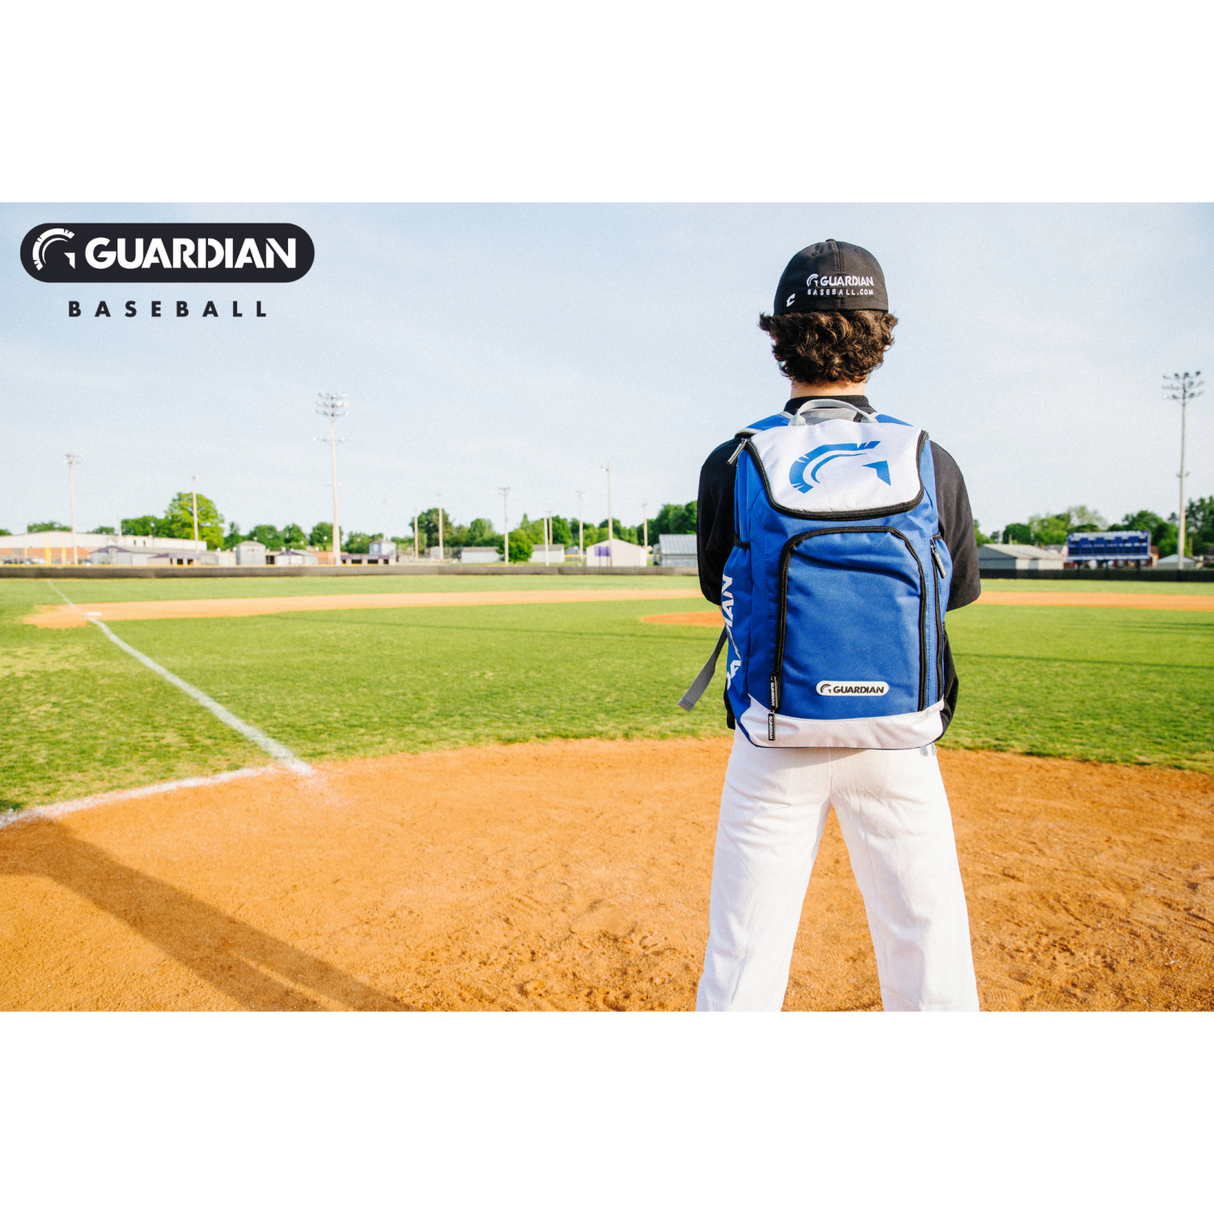 Guardian Baseball Rookie Youth Baseball and Softball Bag - Backpack - Batting Bag - Size Youth, Black/White